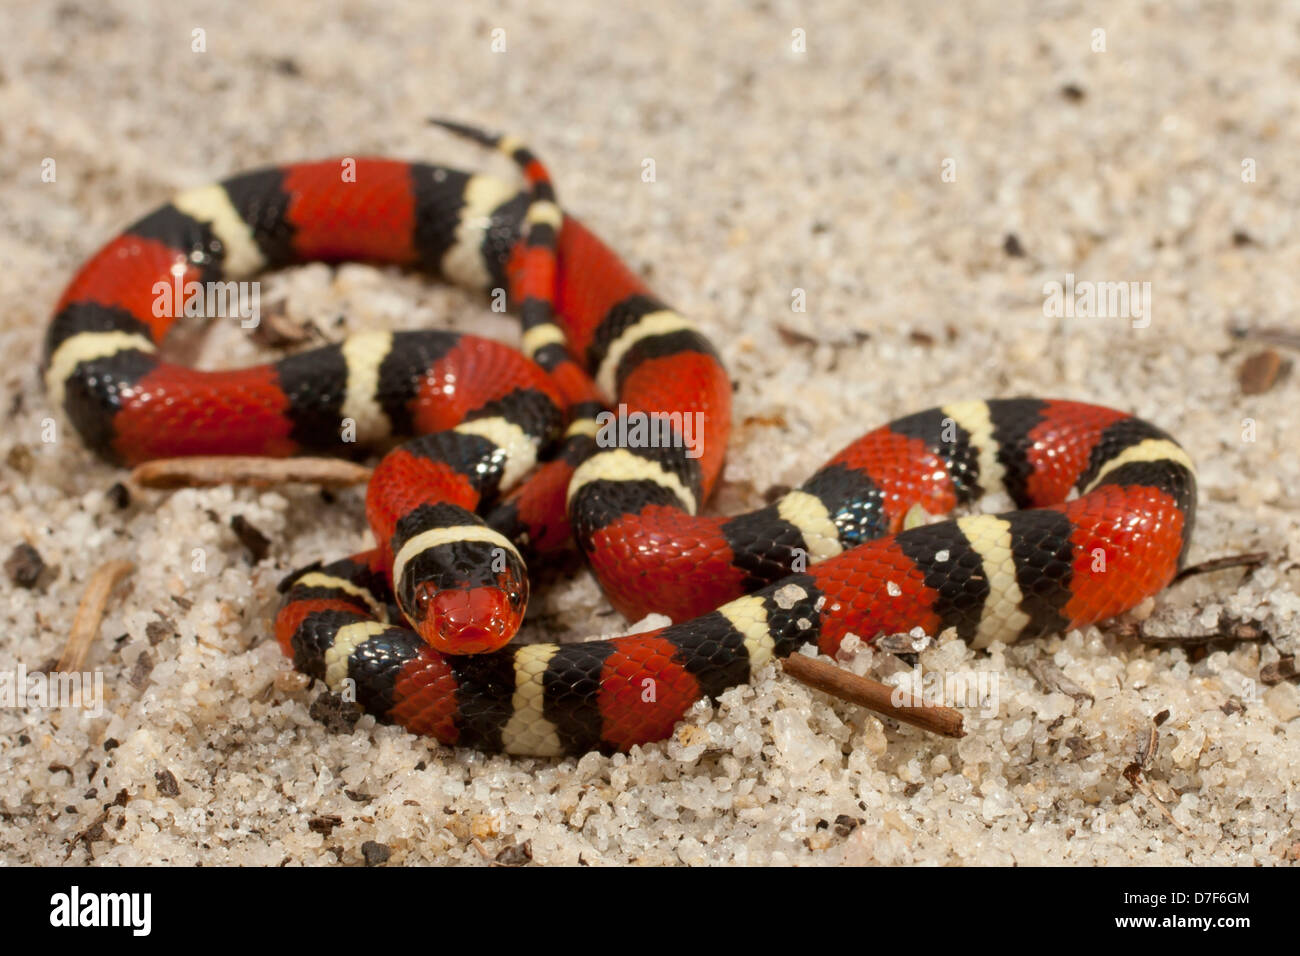 Closeup view of a scarlet king snake in sand - Lampropeltis elapsoides Stock Photo